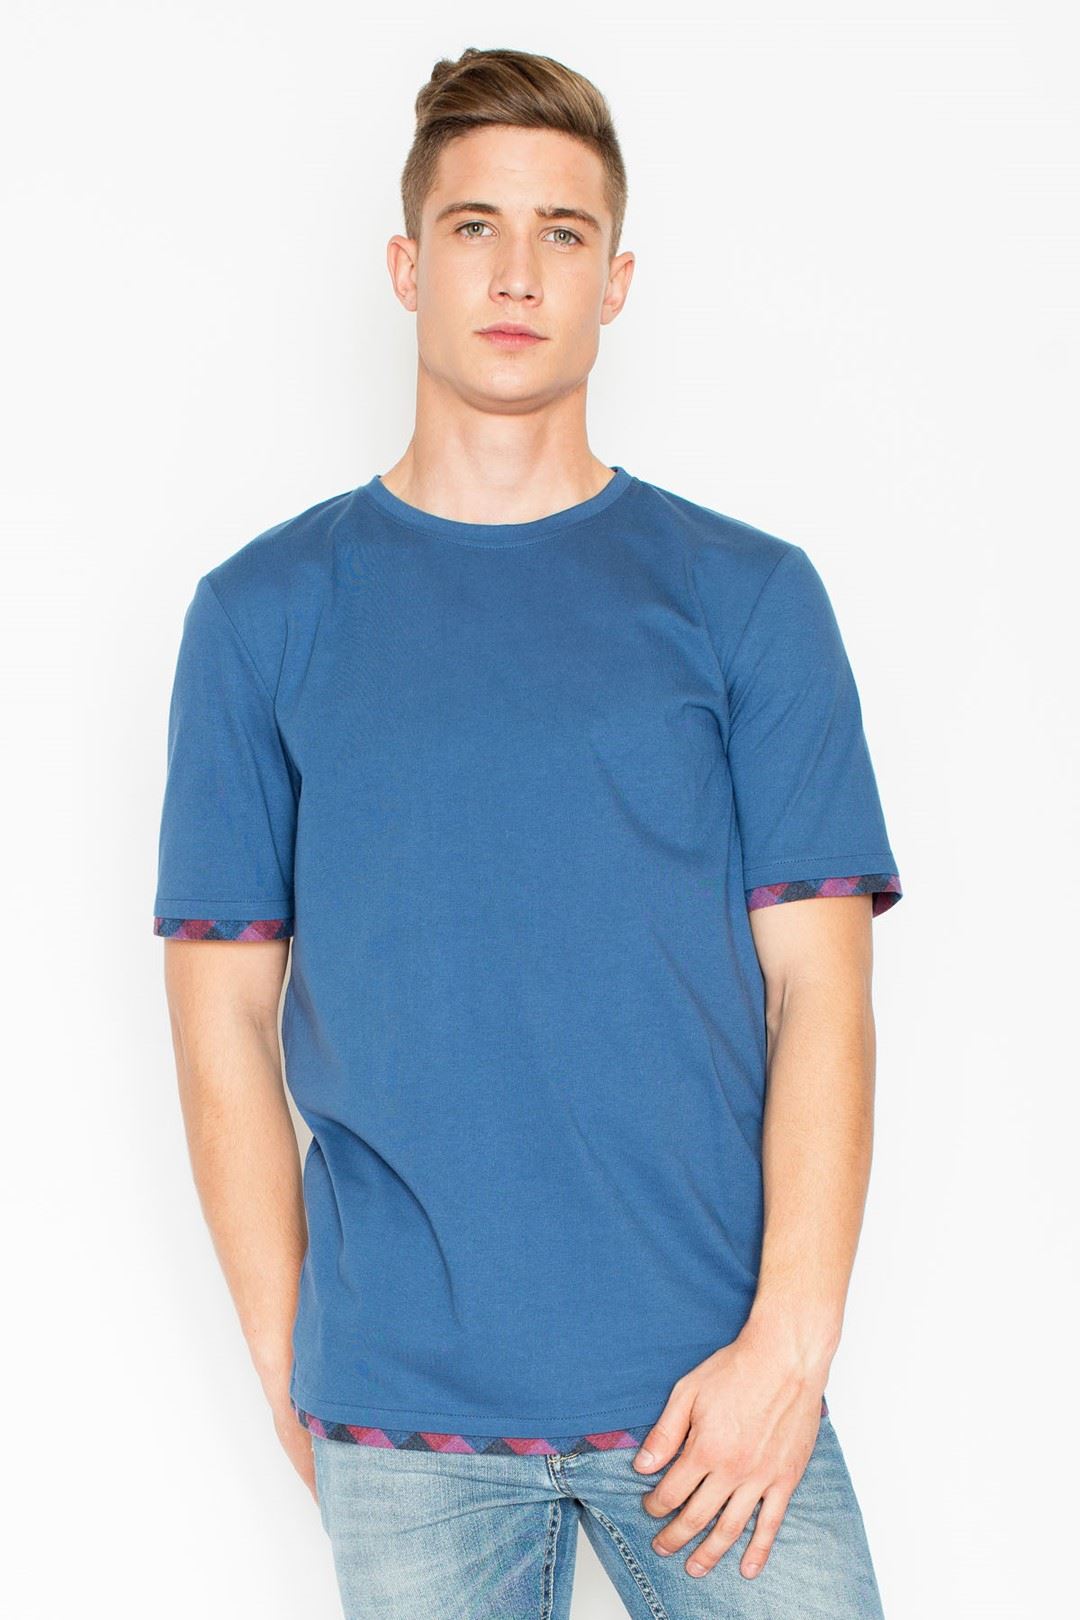 Koszulka V032 Niebieski XL